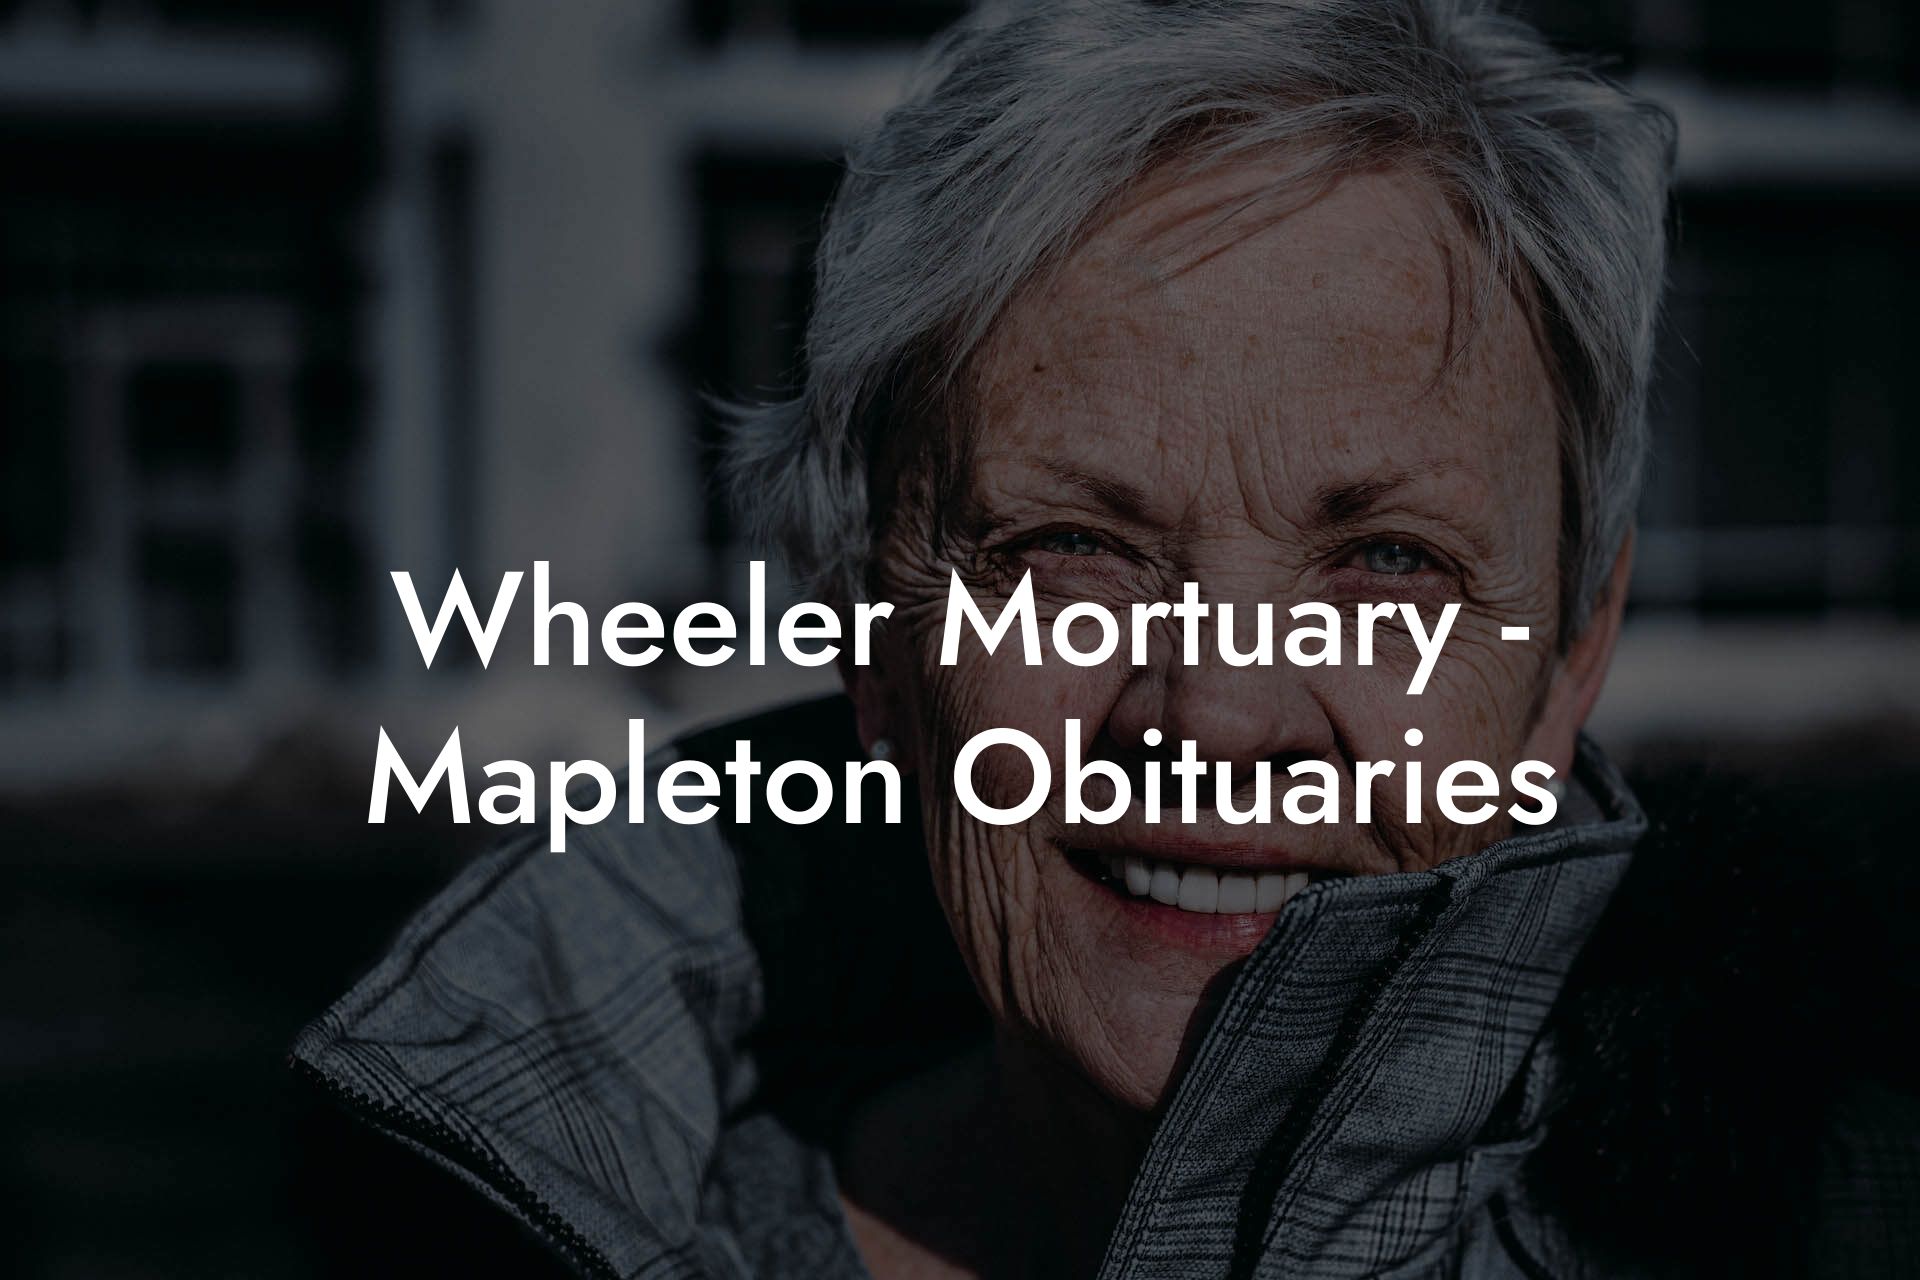 Wheeler Mortuary - Mapleton Obituaries